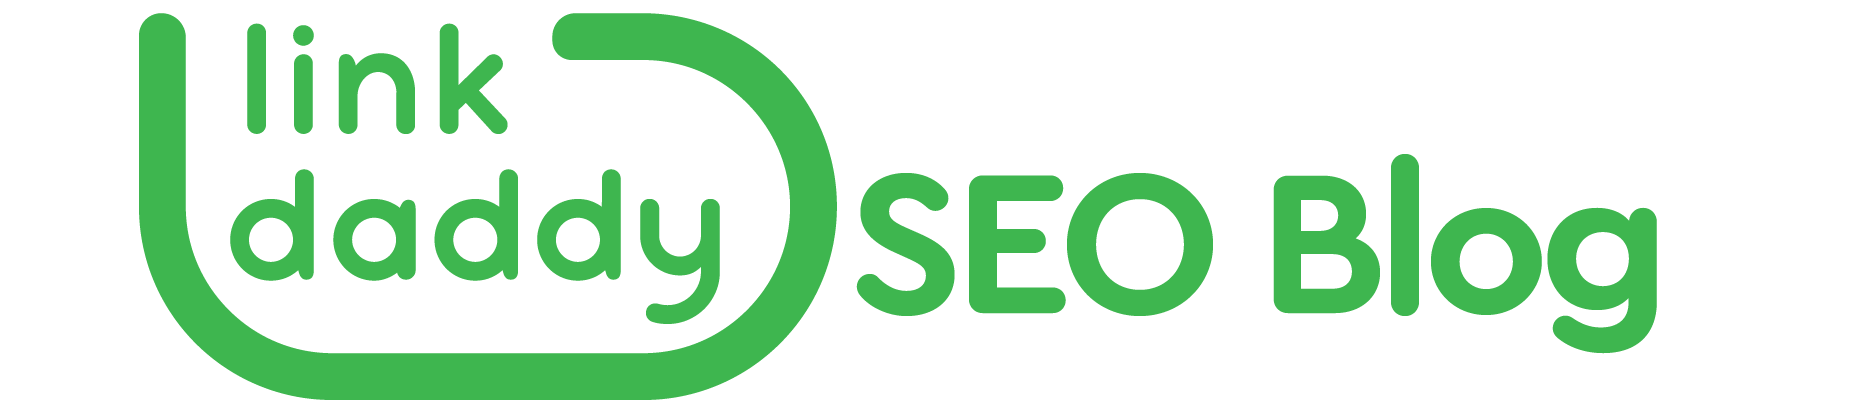 https://storage.googleapis.com/cloudsites/seo-services/865d5586m/img/cropped-linkdaddy-seoblog-logo.png